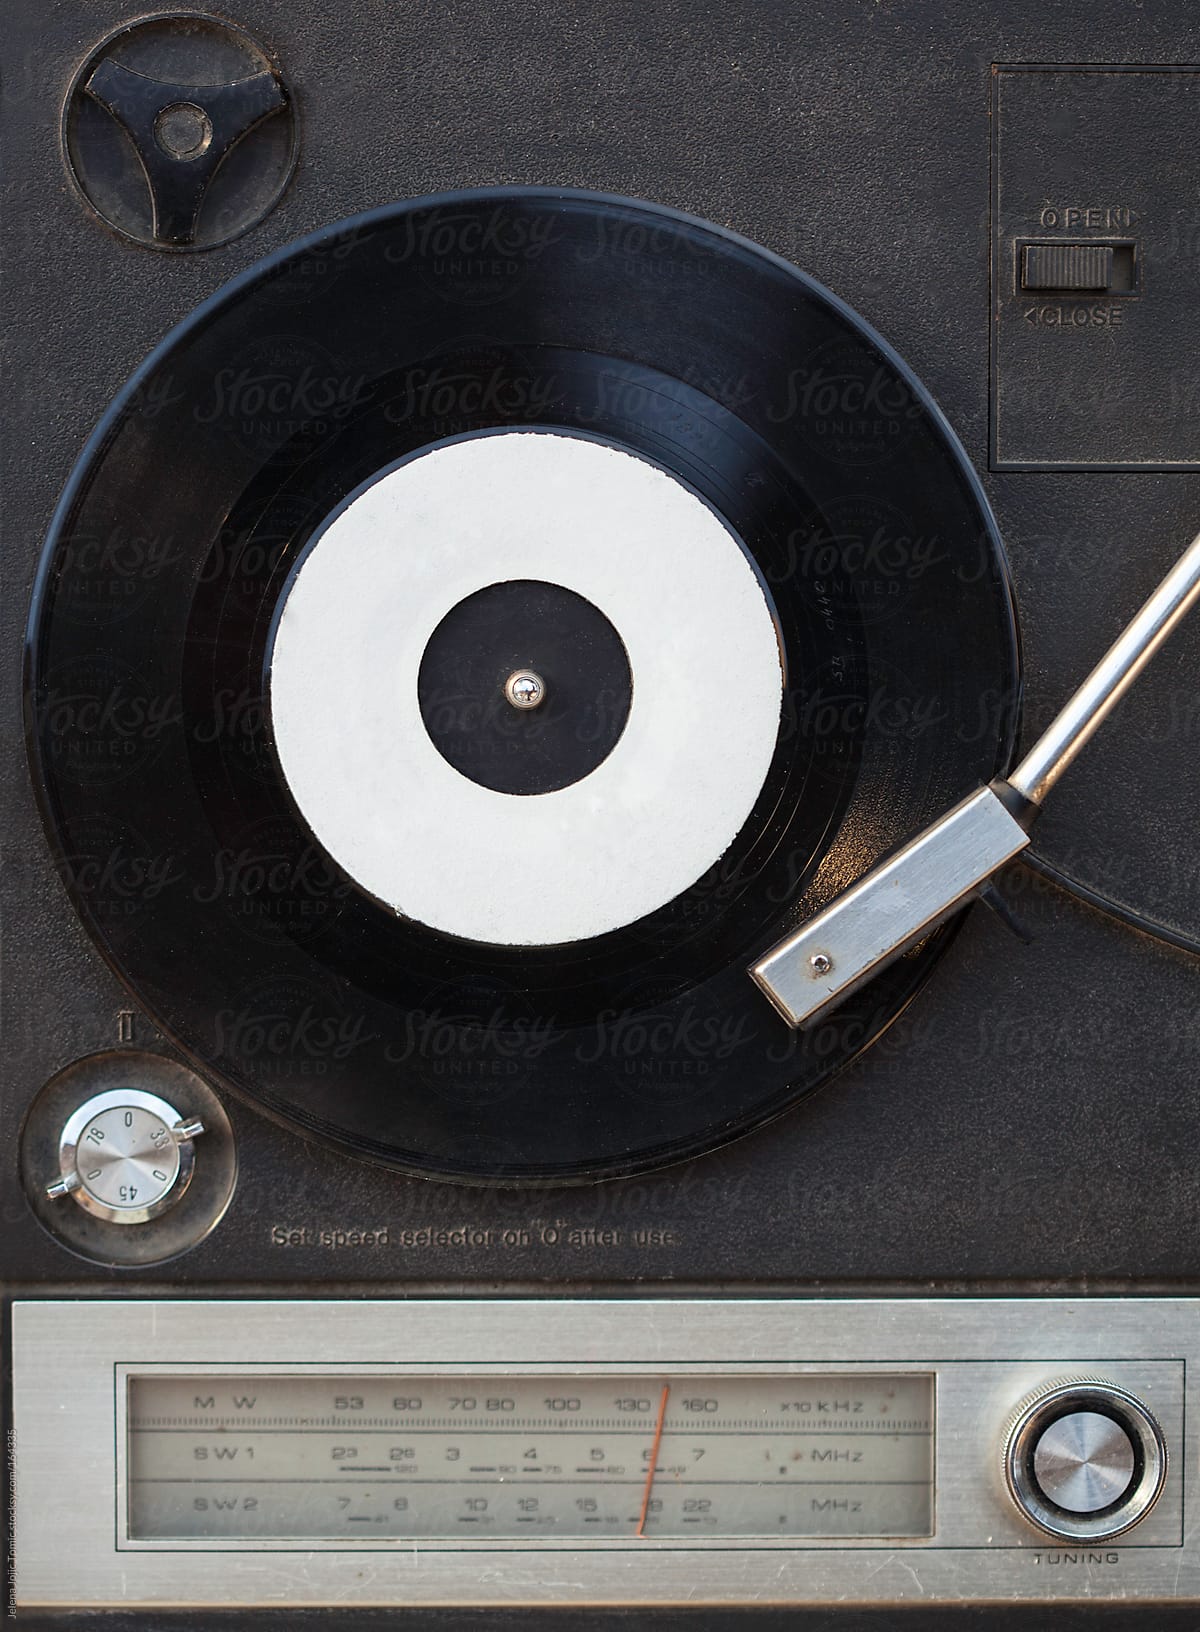 Vintage vinyl player and radio tuner